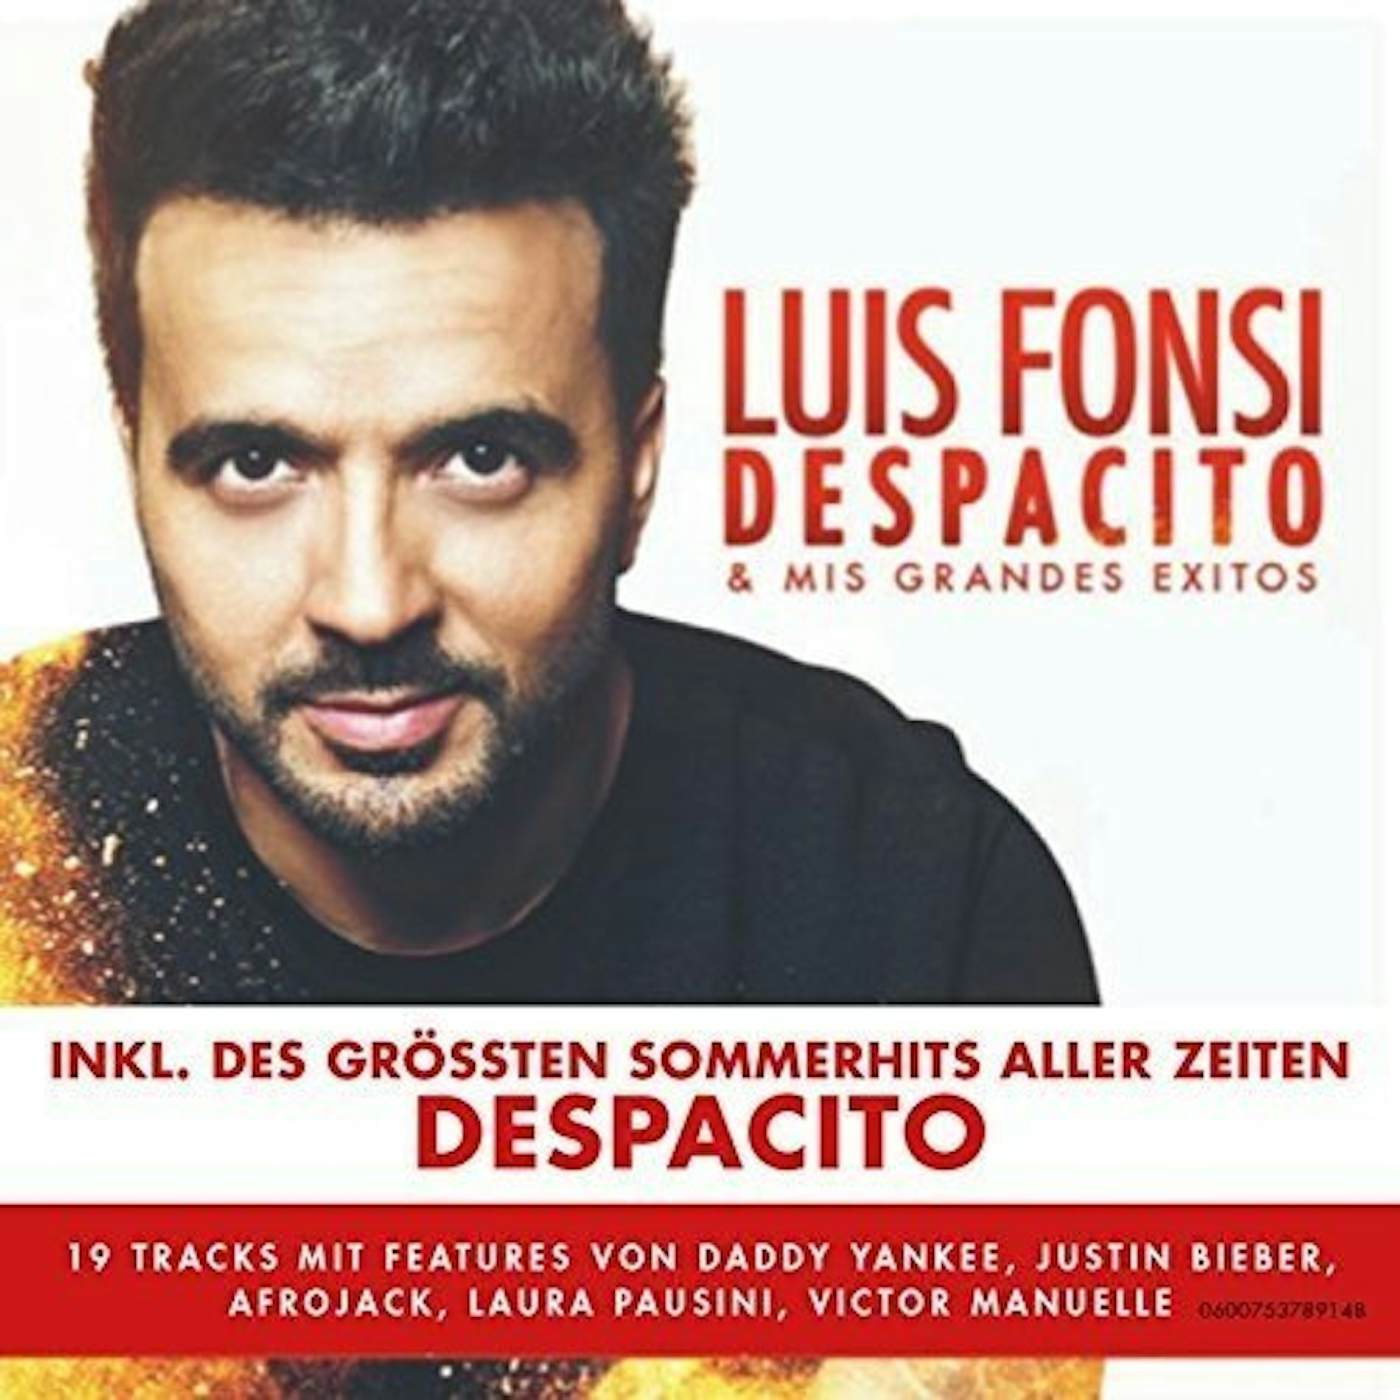 Luis Fonsi DESPACITO & MIS GRANDES CD